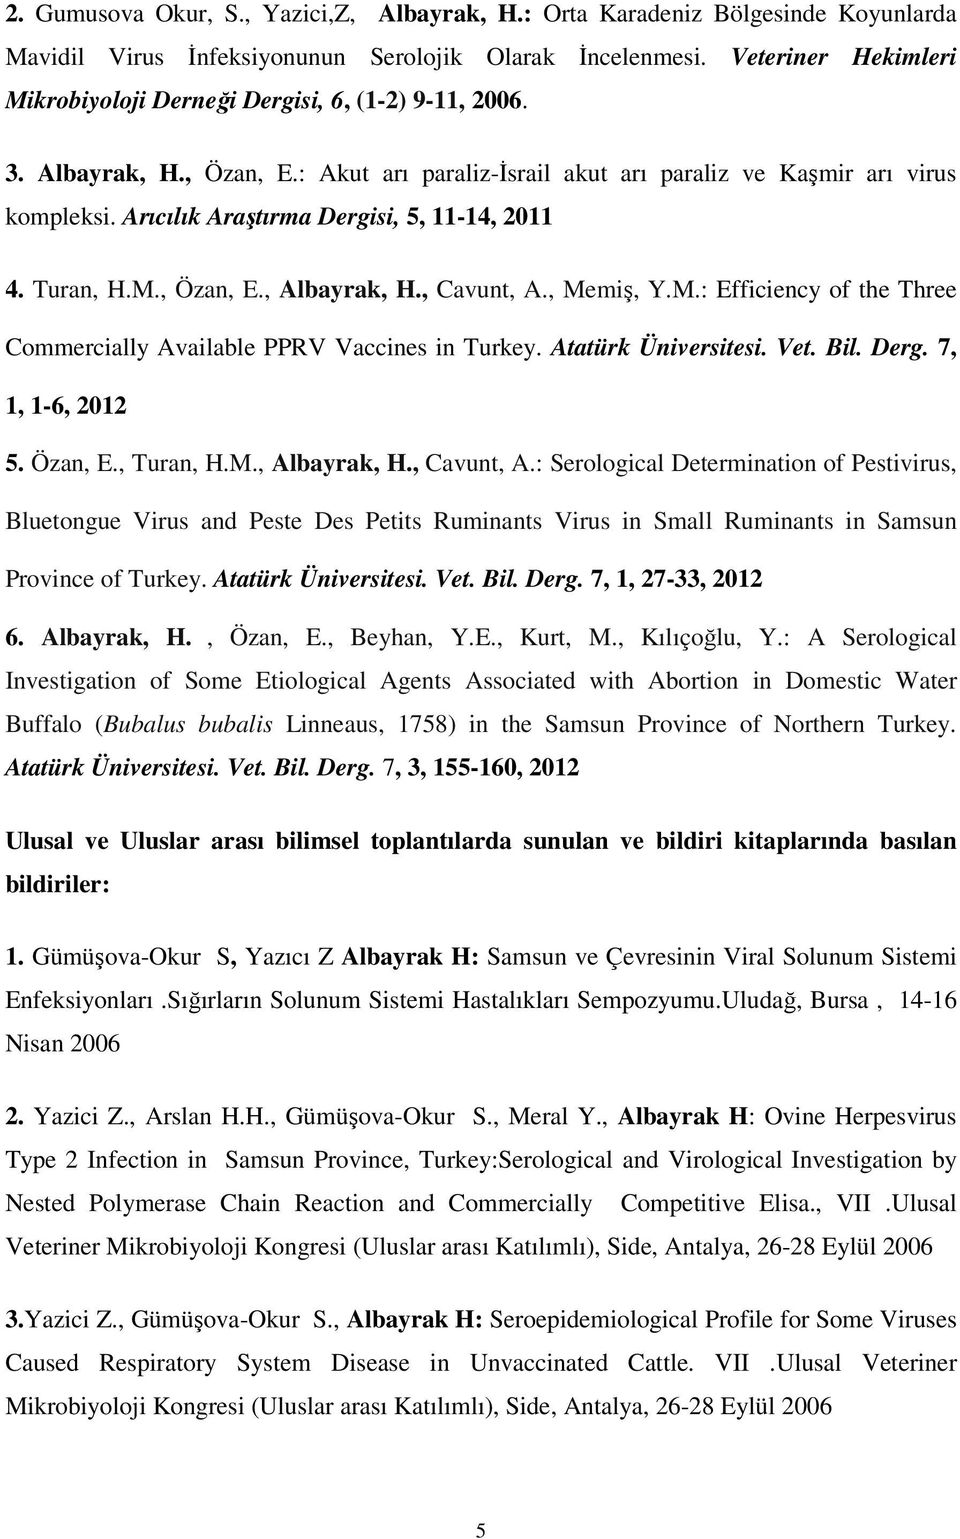 Arıcılık Araştırma Dergisi, 5, 11-14, 2011 4. Turan, H.M., Özan, E., Albayrak, H., Cavunt, A., Memiş, Y.M.: Efficiency of the Three Commercially Available PPRV Vaccines in Turkey.